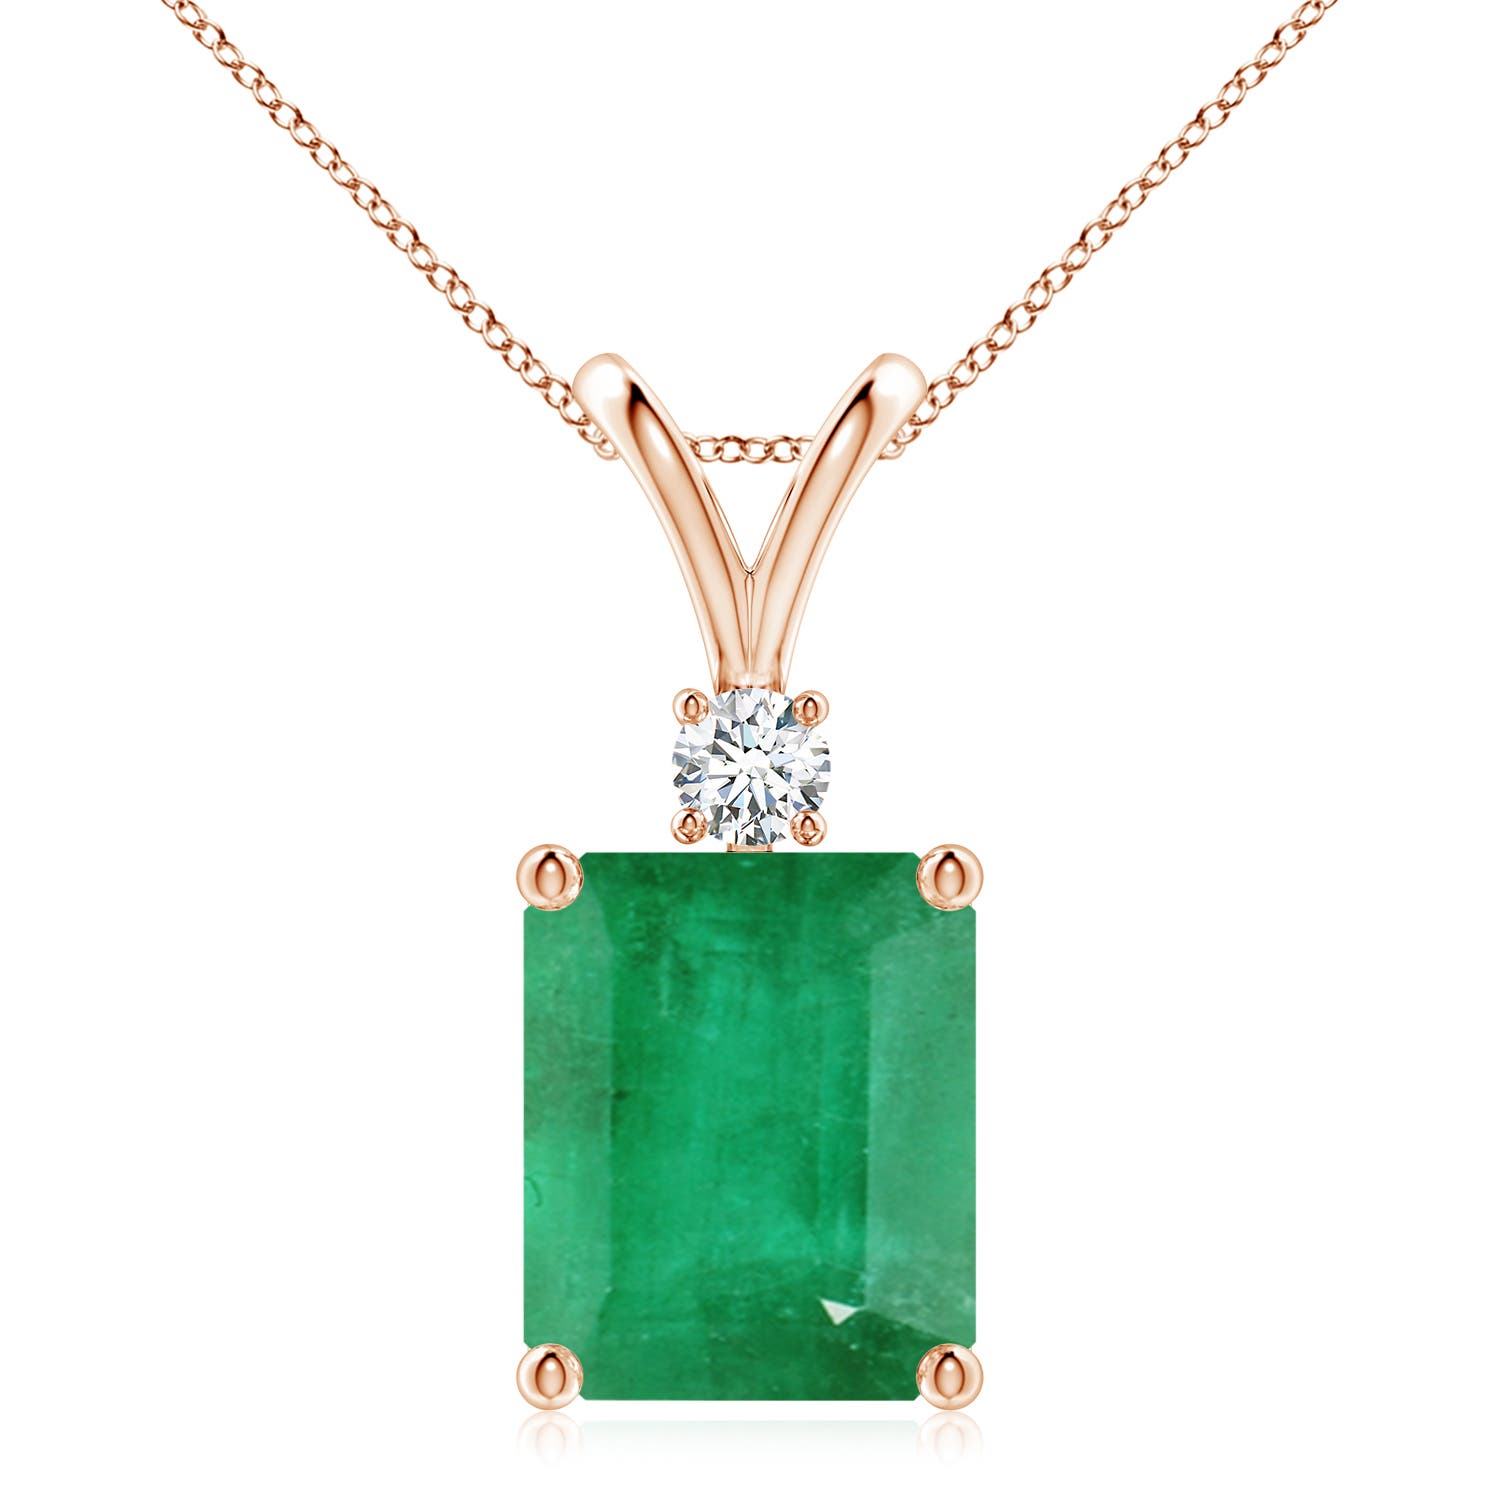 A - Emerald / 5.91 CT / 14 KT Rose Gold